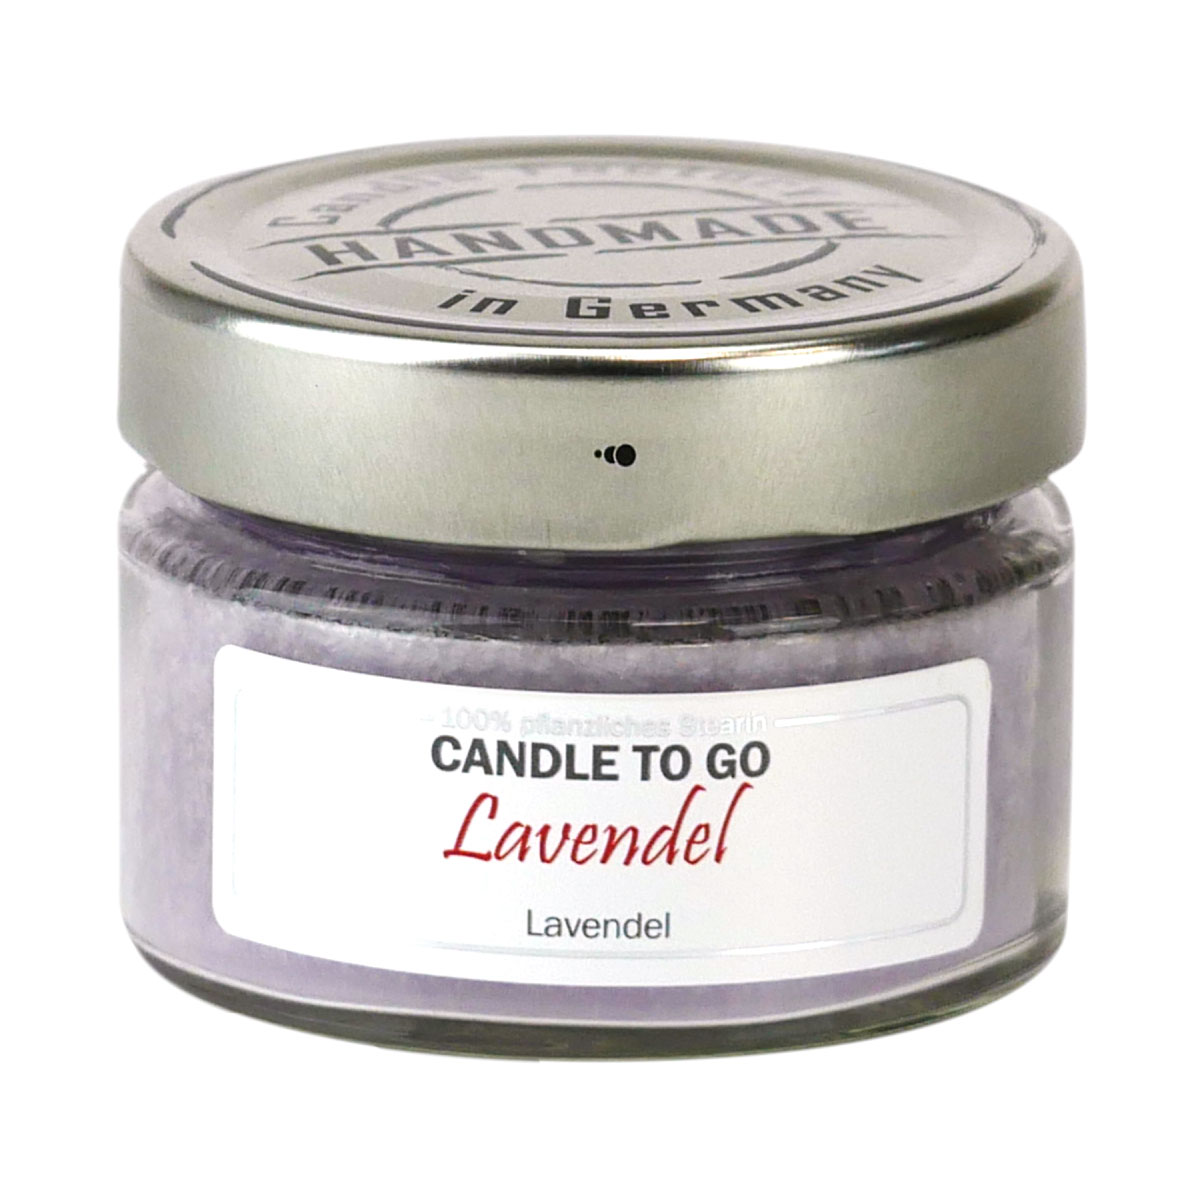 Lavendel - Candle to Go Duftkerze von Candle Factory